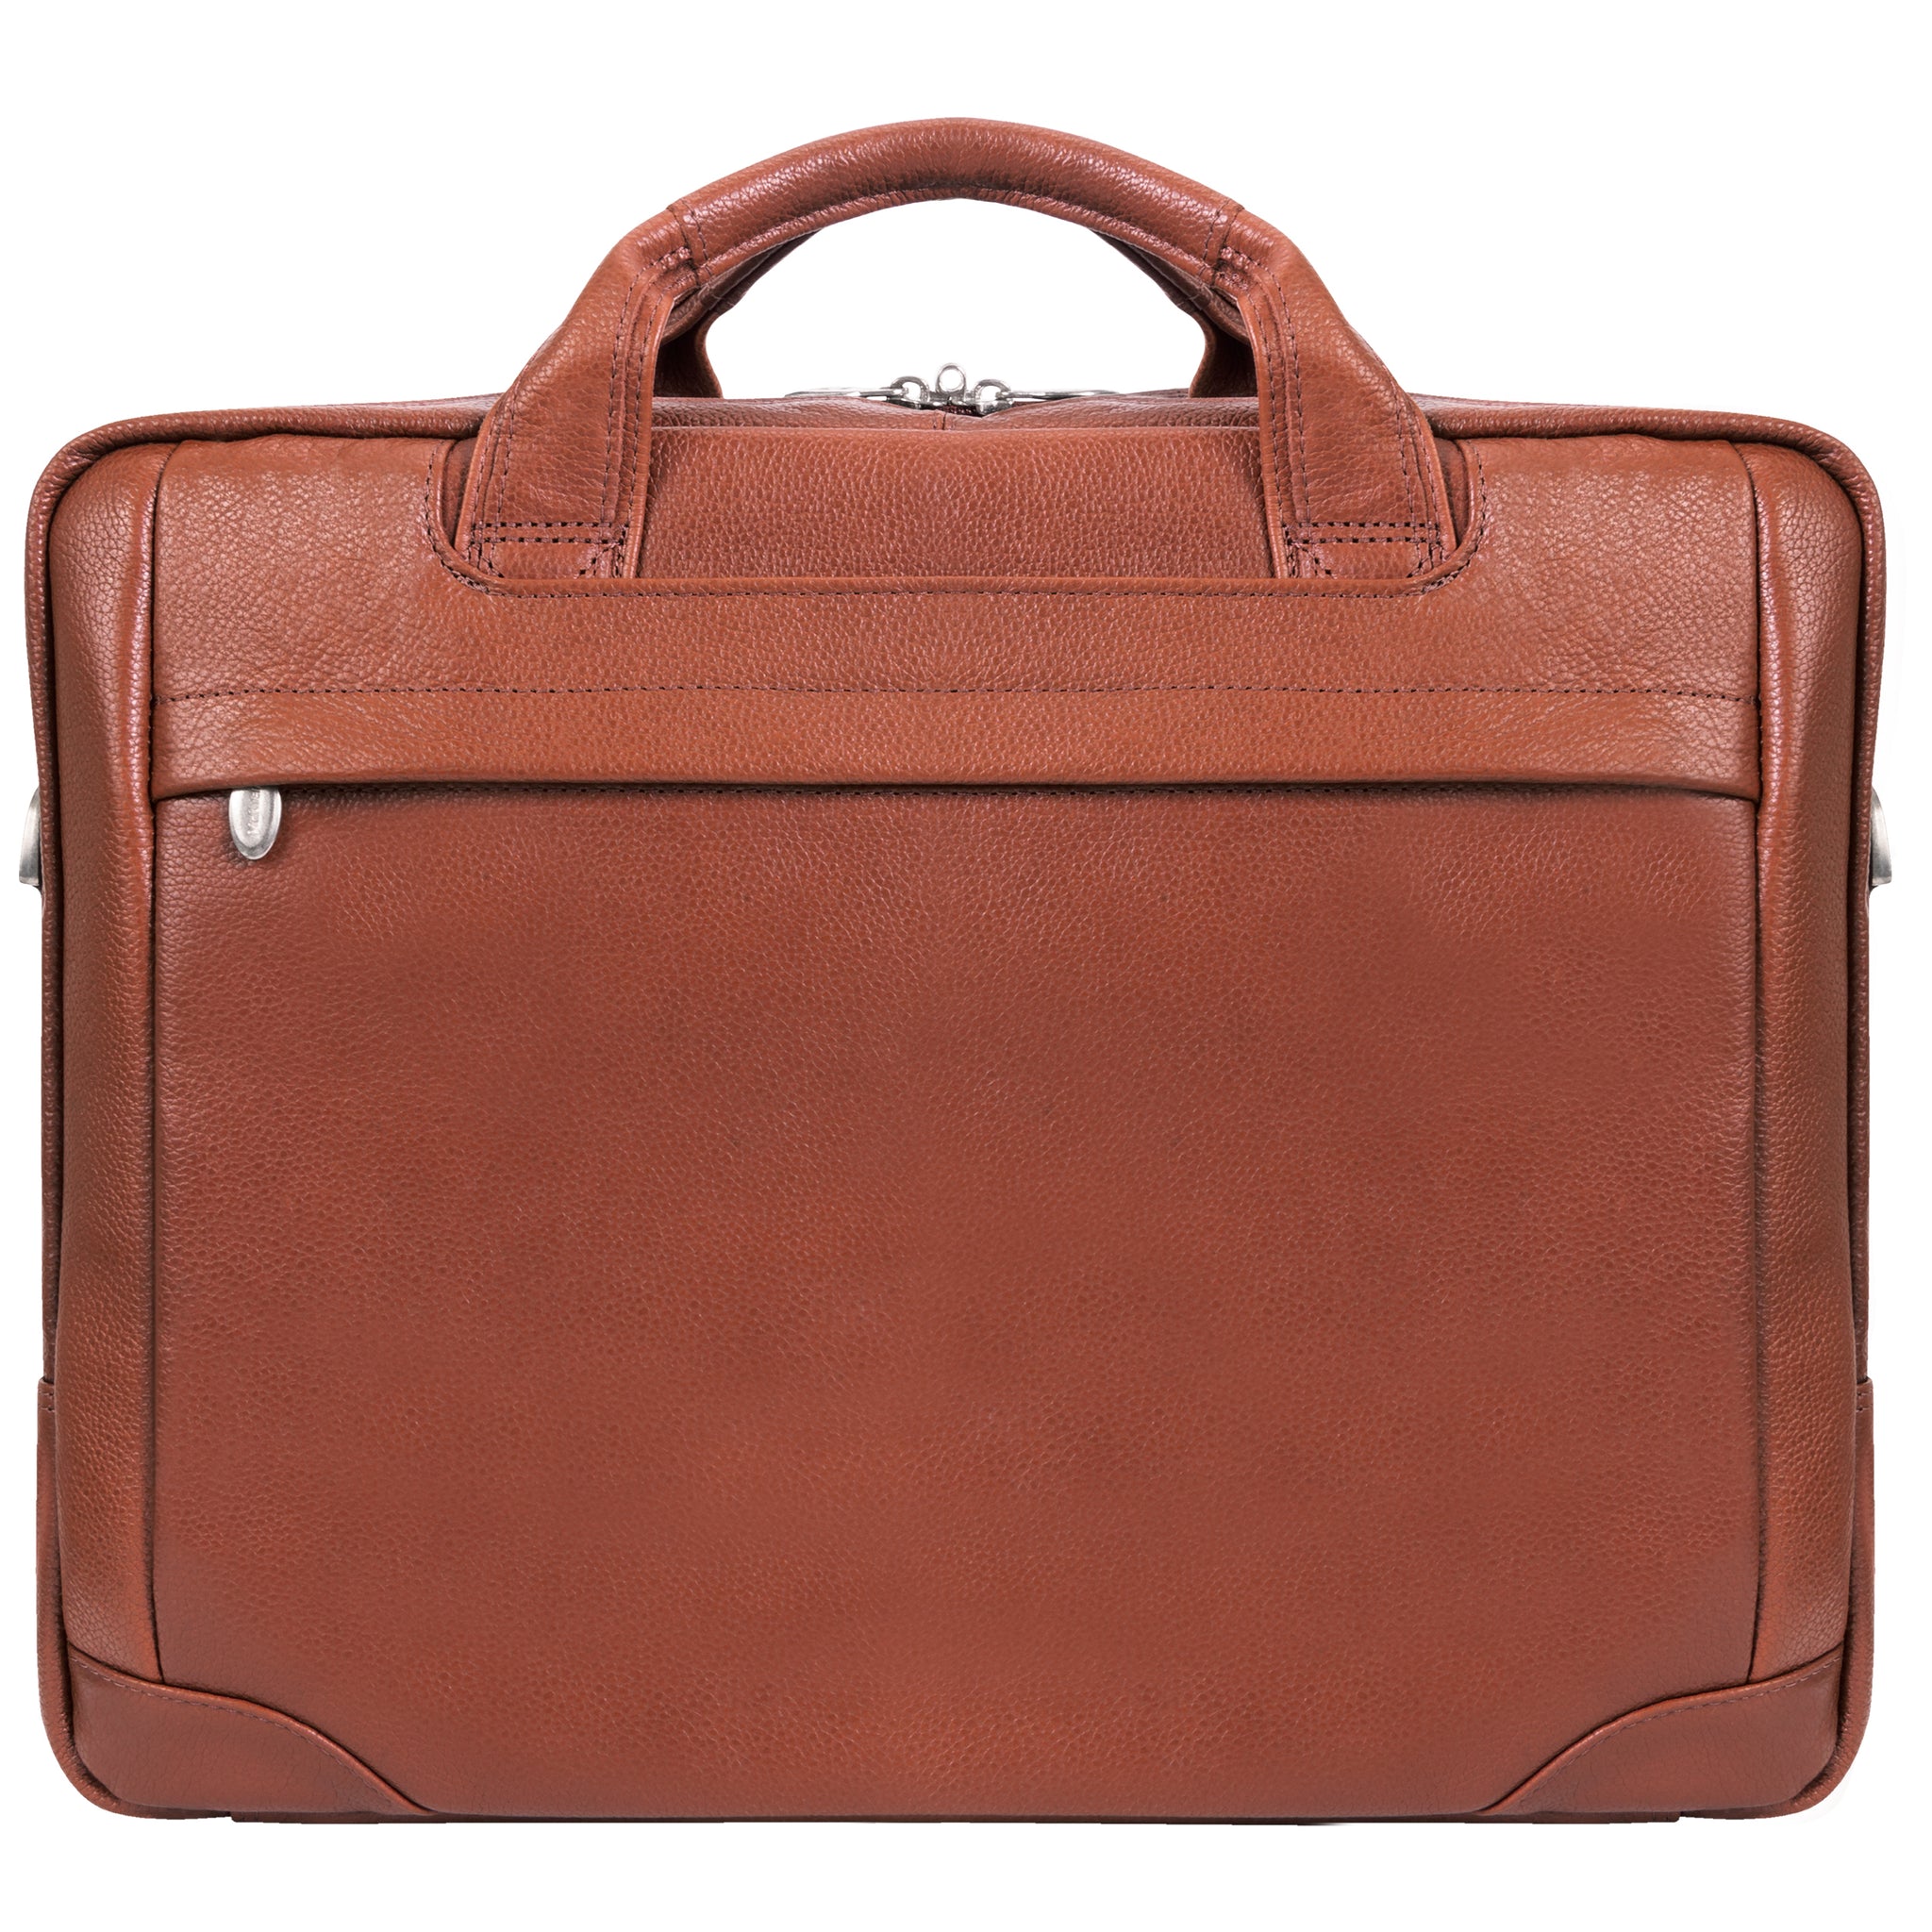 McKlein BRIDGEPORT 17" Large Leather Laptop & Tablet Briefcase